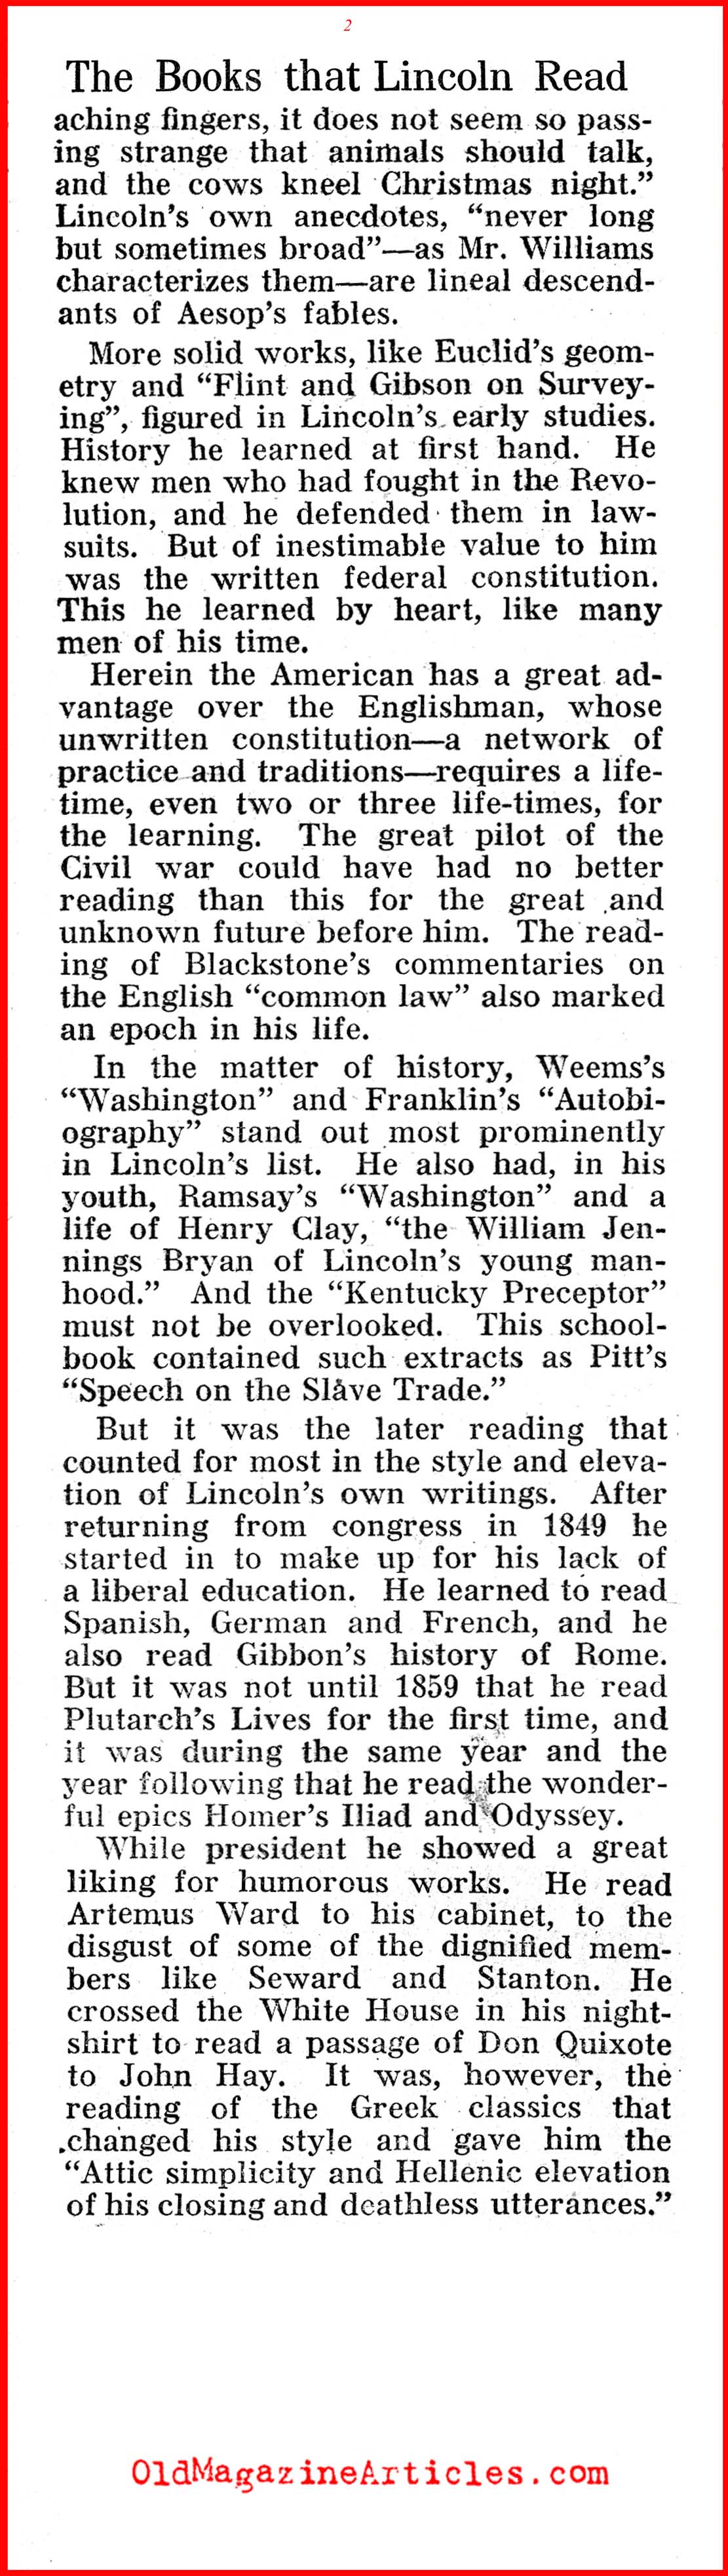 The Books Lincoln Read (Pathfinder Magazine, 1920)